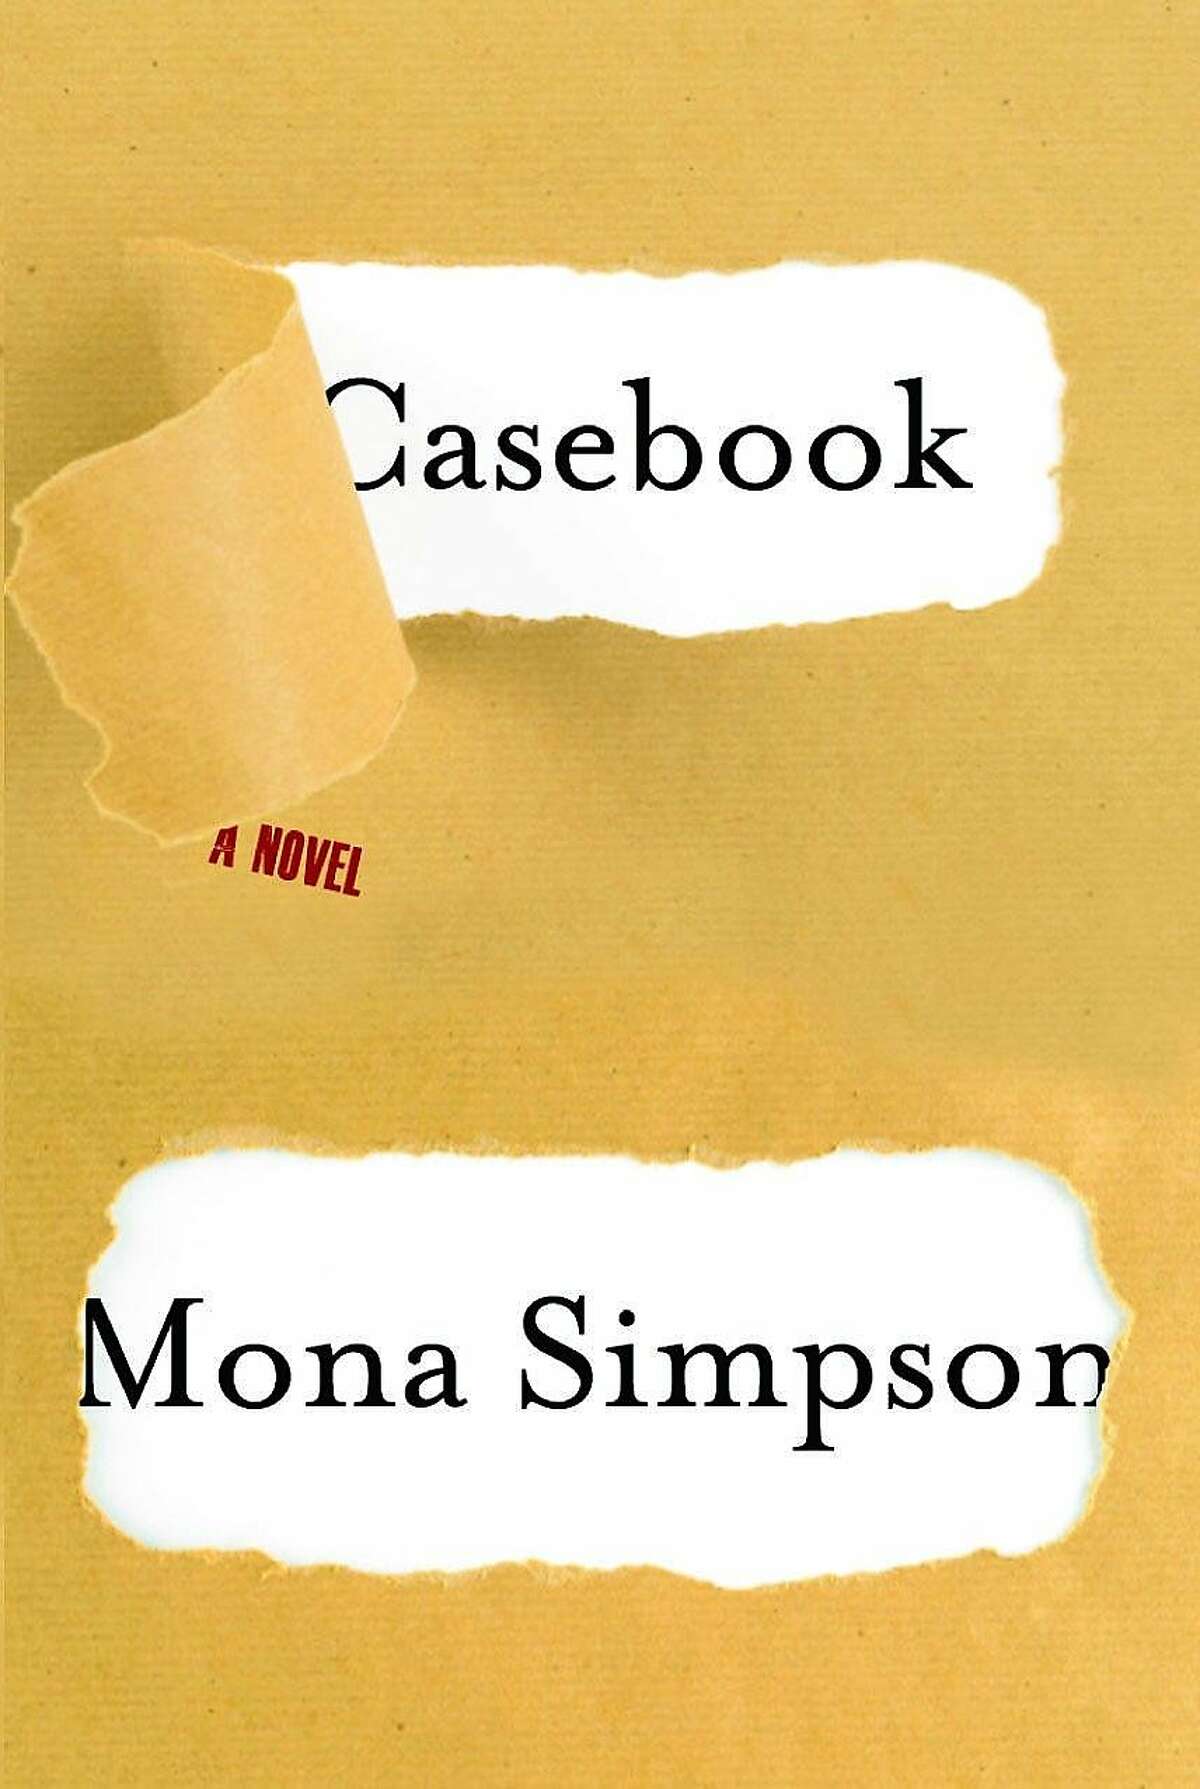 "Casebook," by Mona Simpson